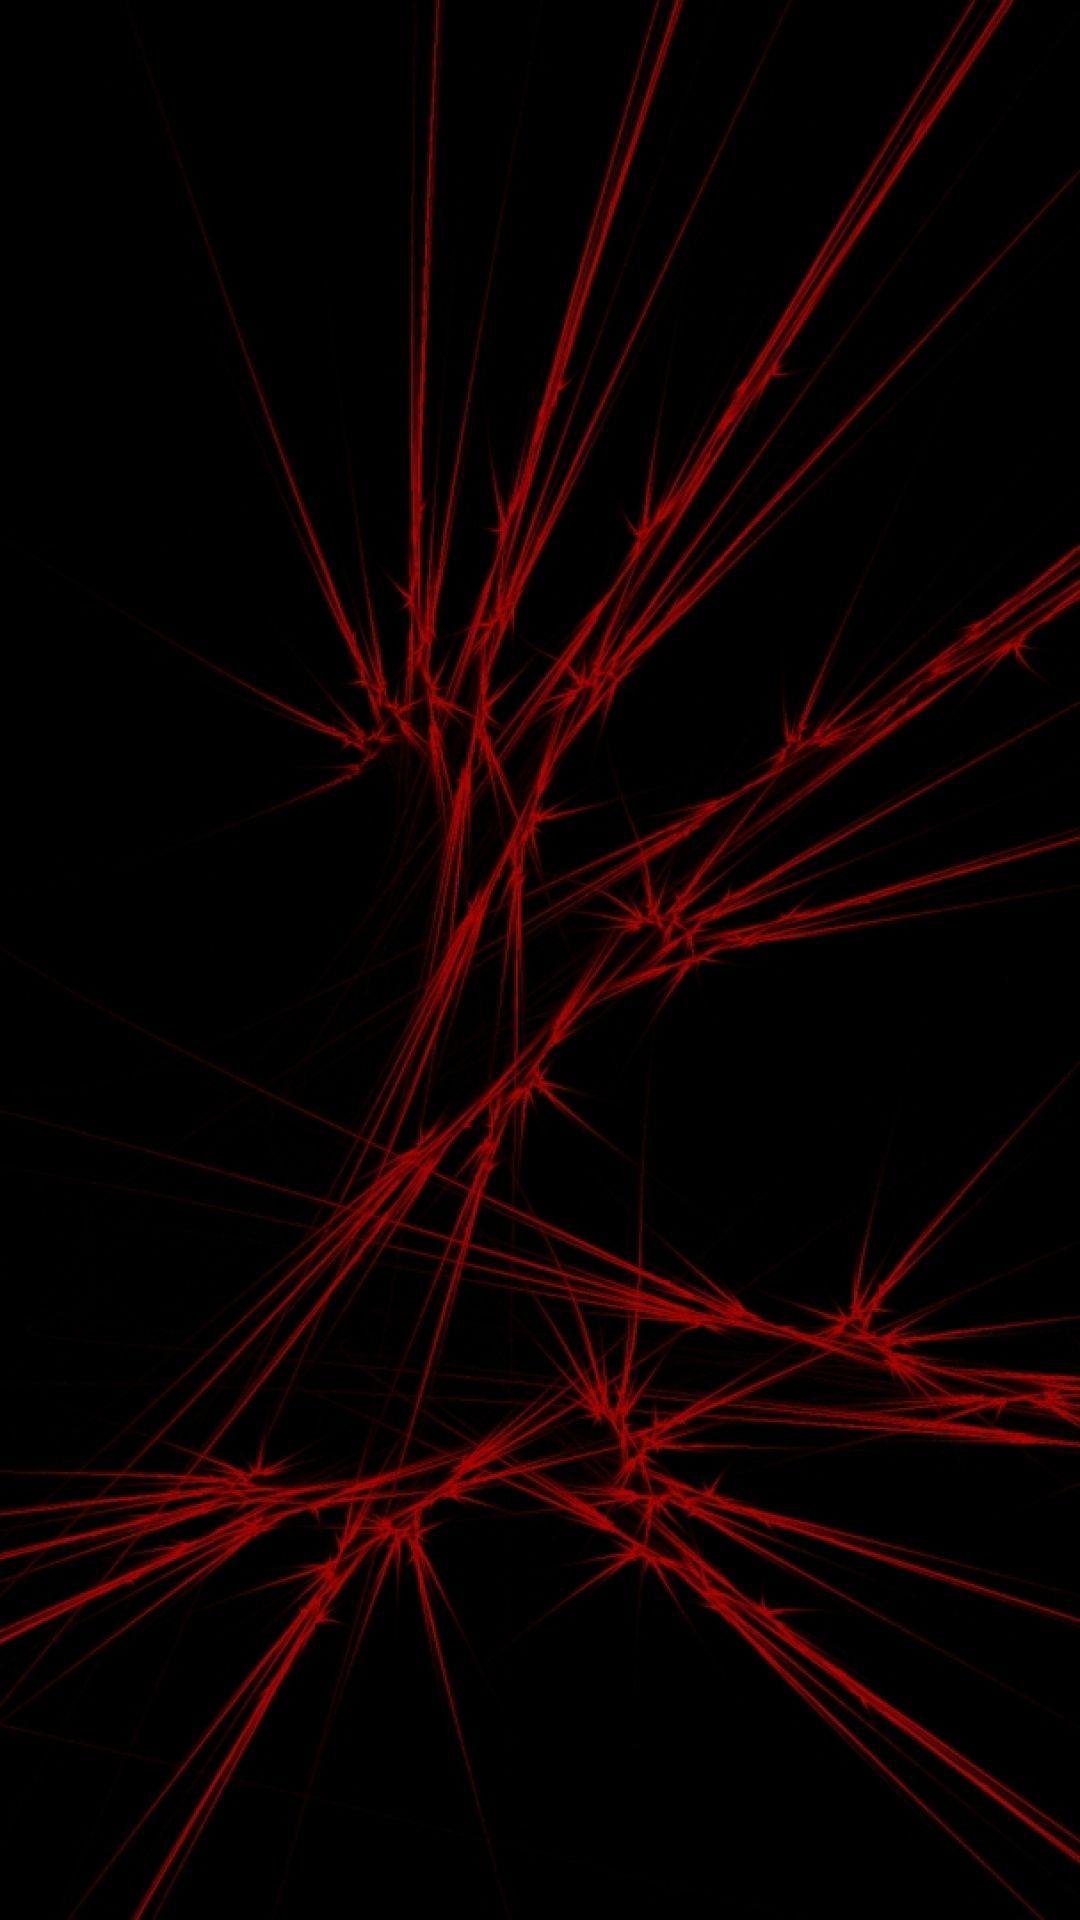 502605 1920x1080 black dark abstract 3d shards glass red wallpaper JPG 60  kB  Rare Gallery HD Wallpapers